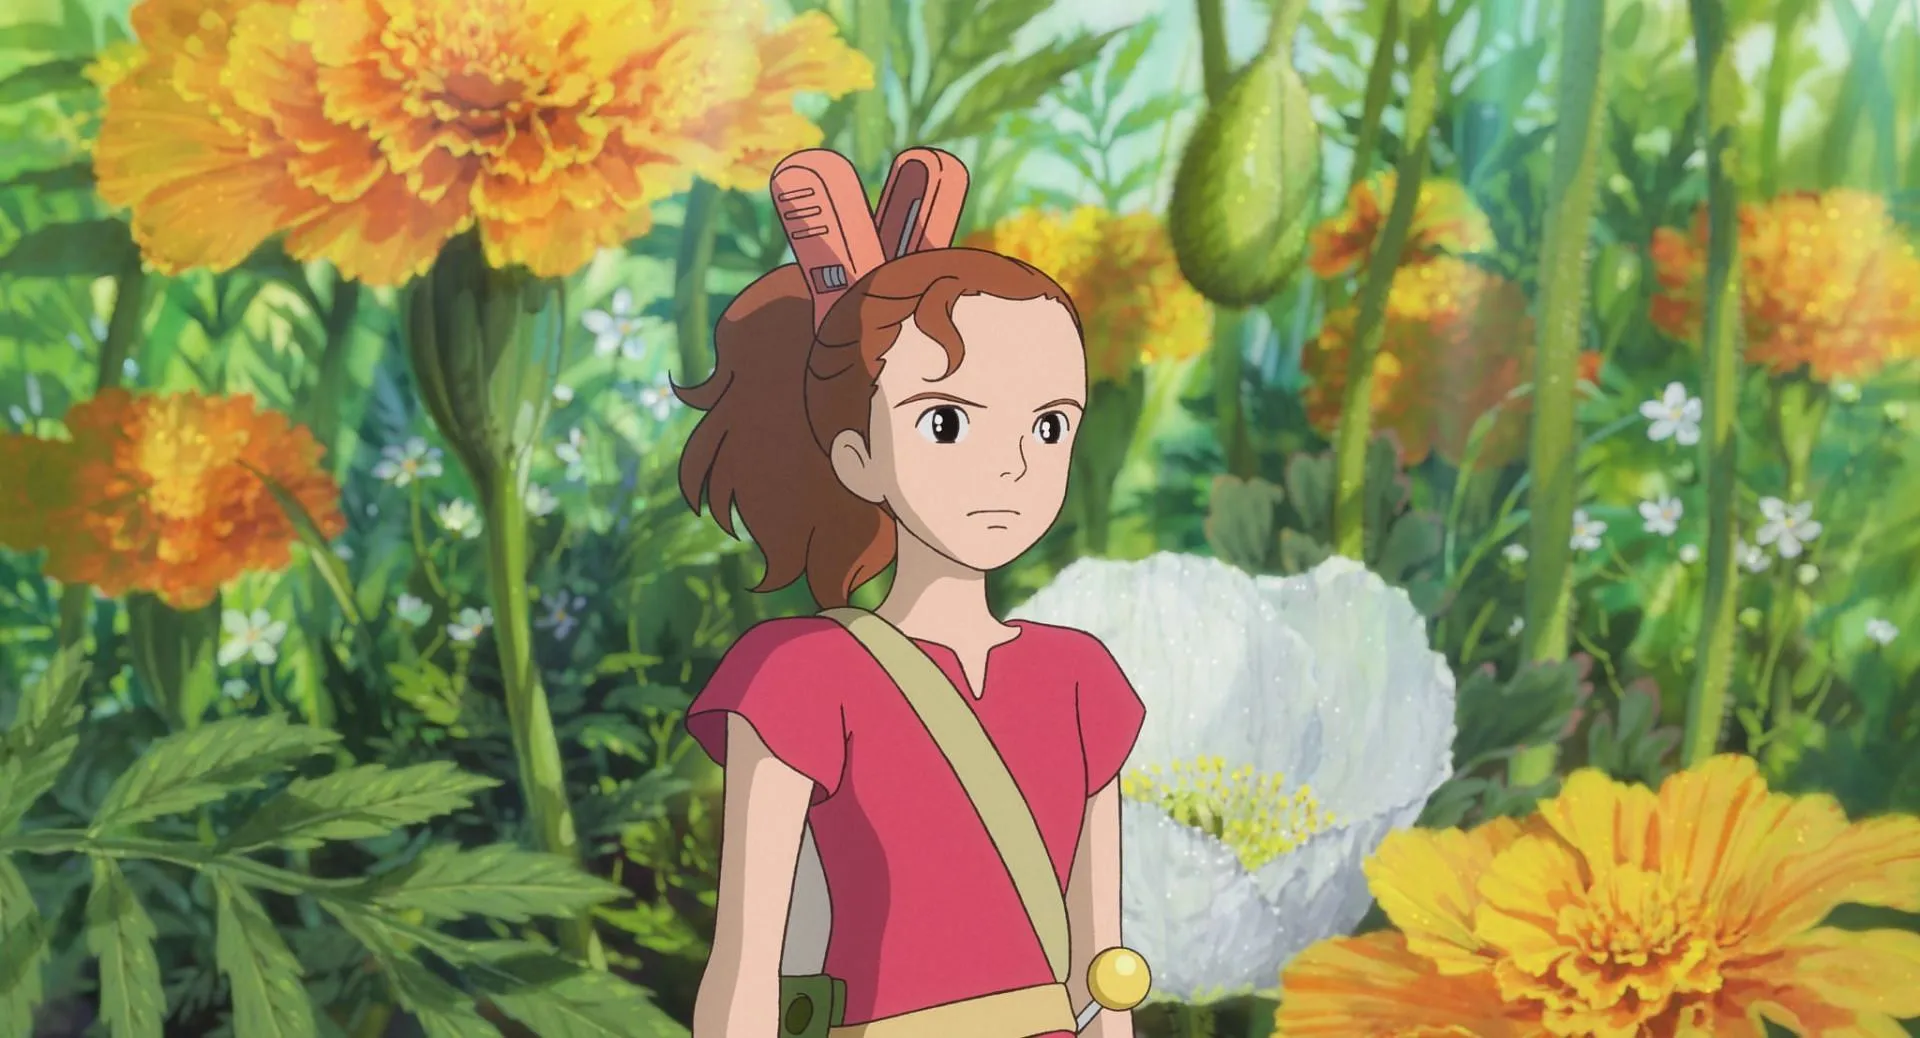 The Secret World of Arrietty (Image via Studio Ghibli)